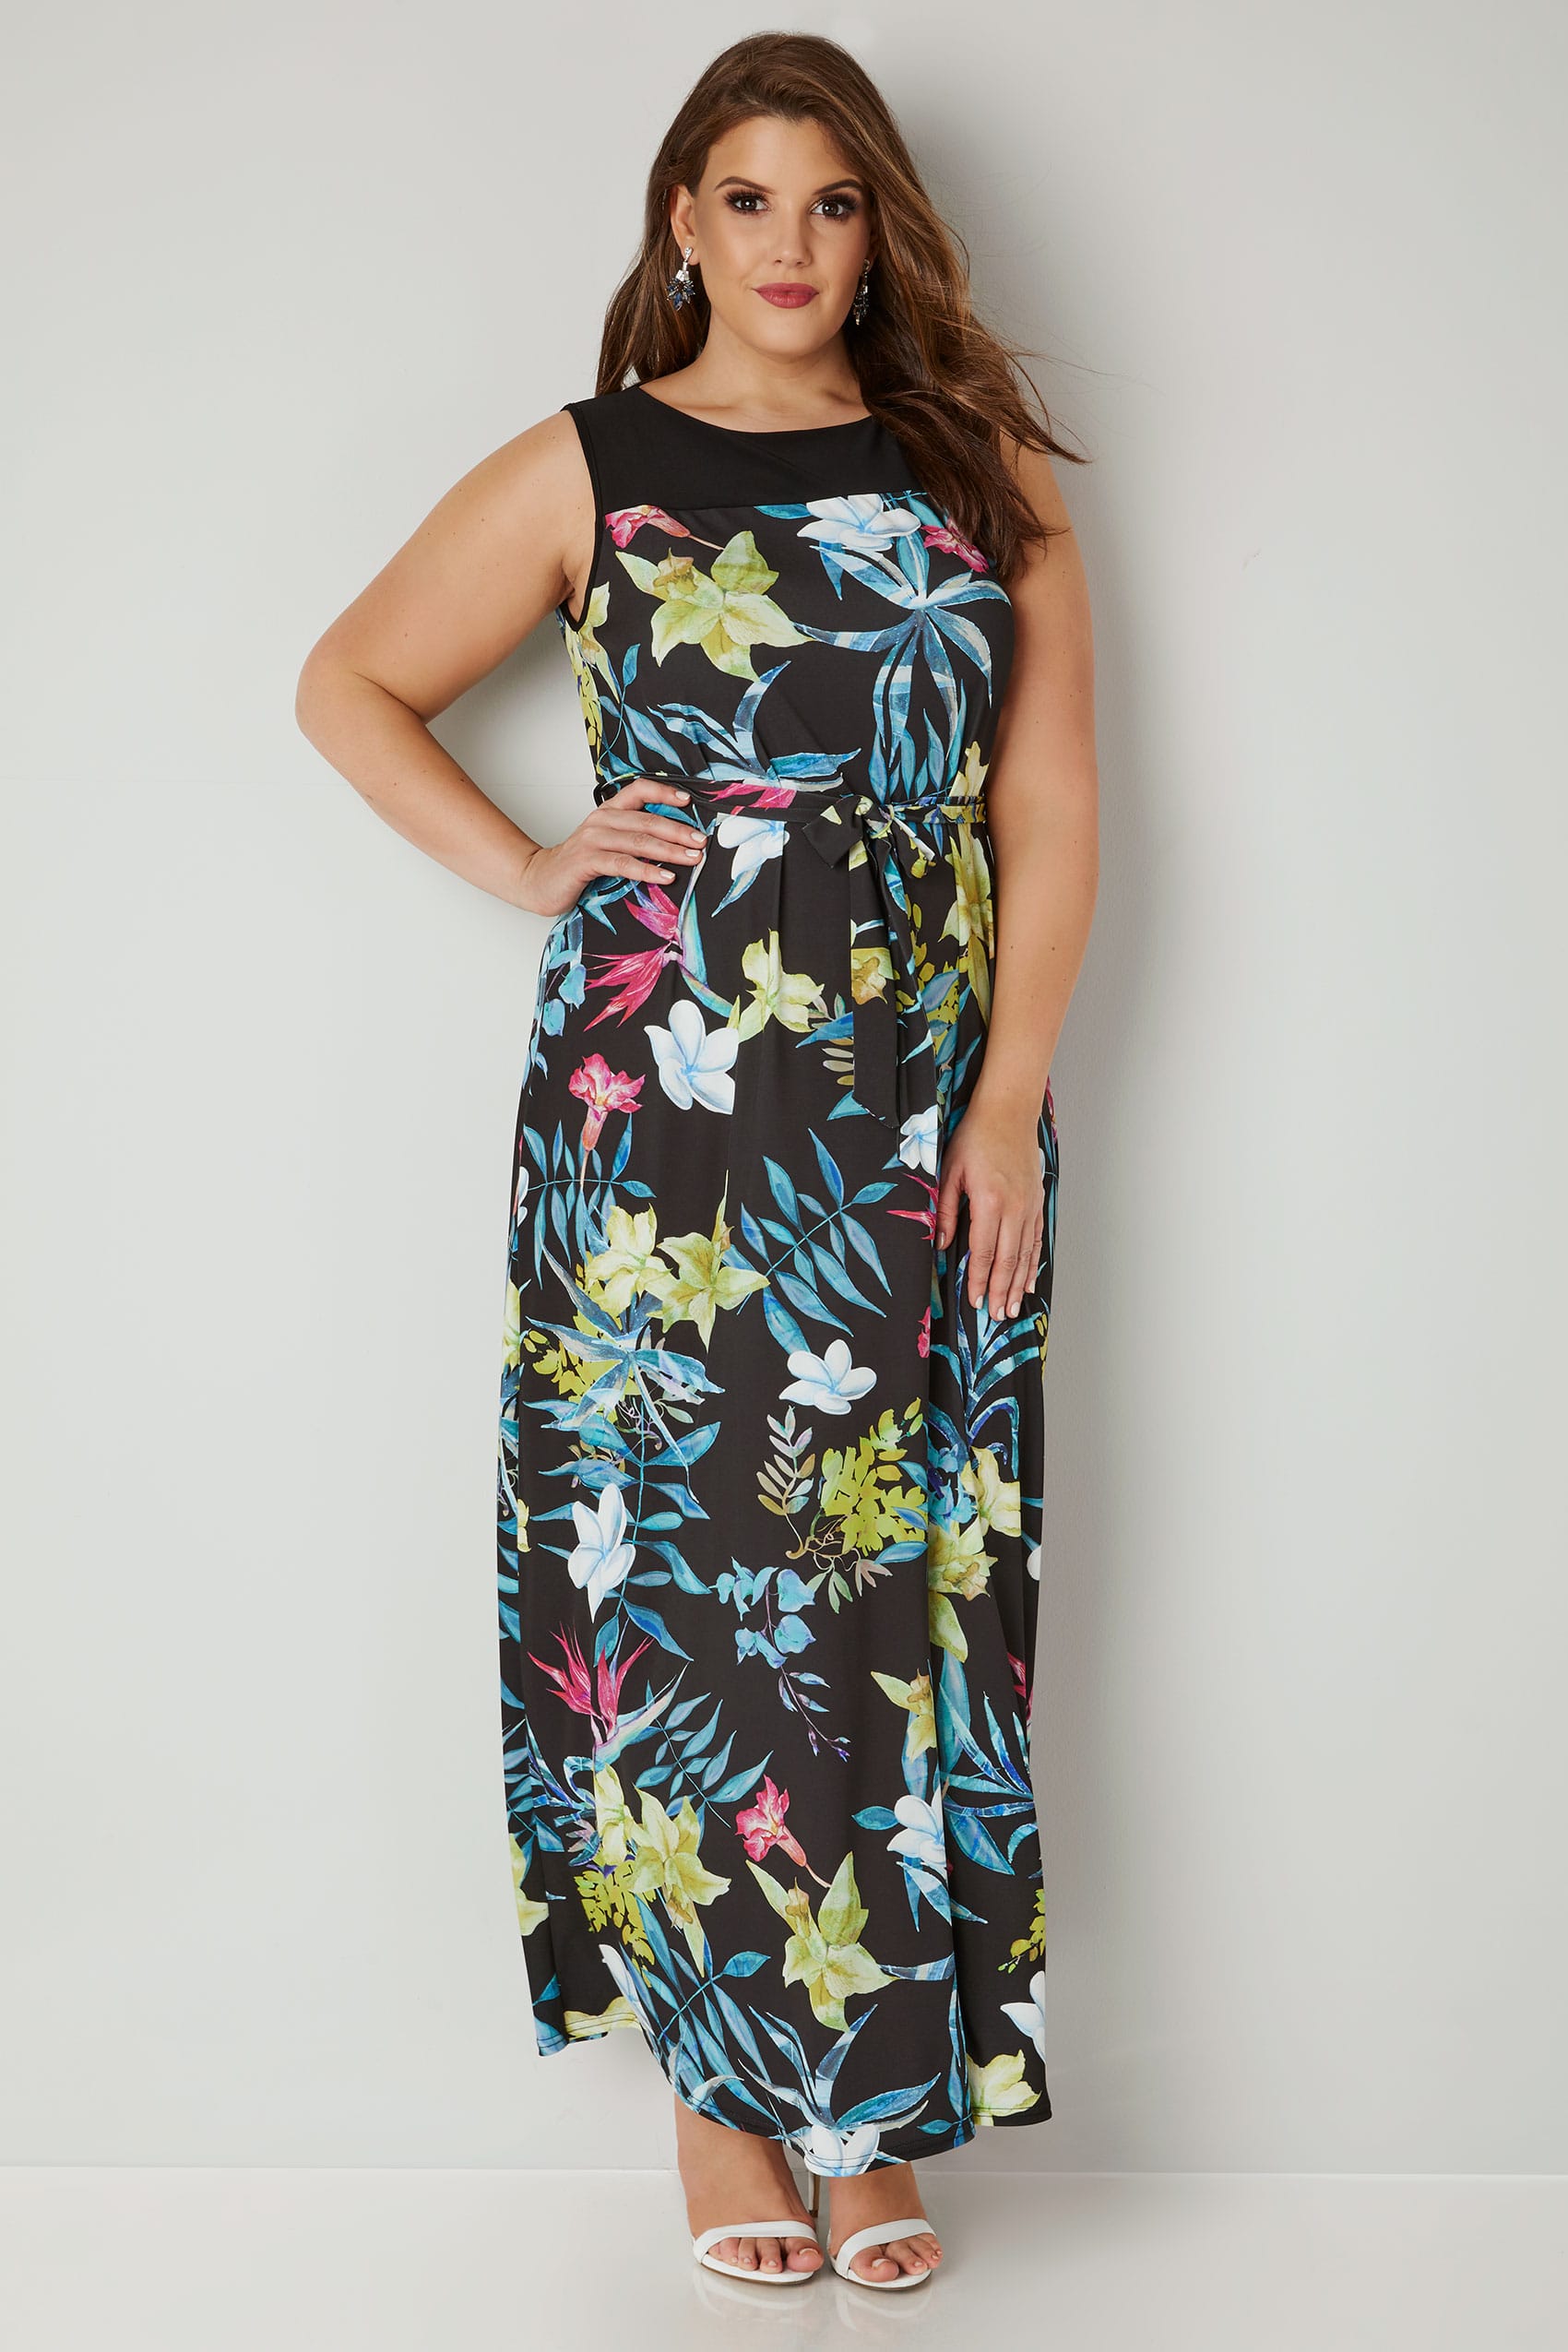 Black & multi Tropical Floral Print Maxi Dress, plus size 16 to 32